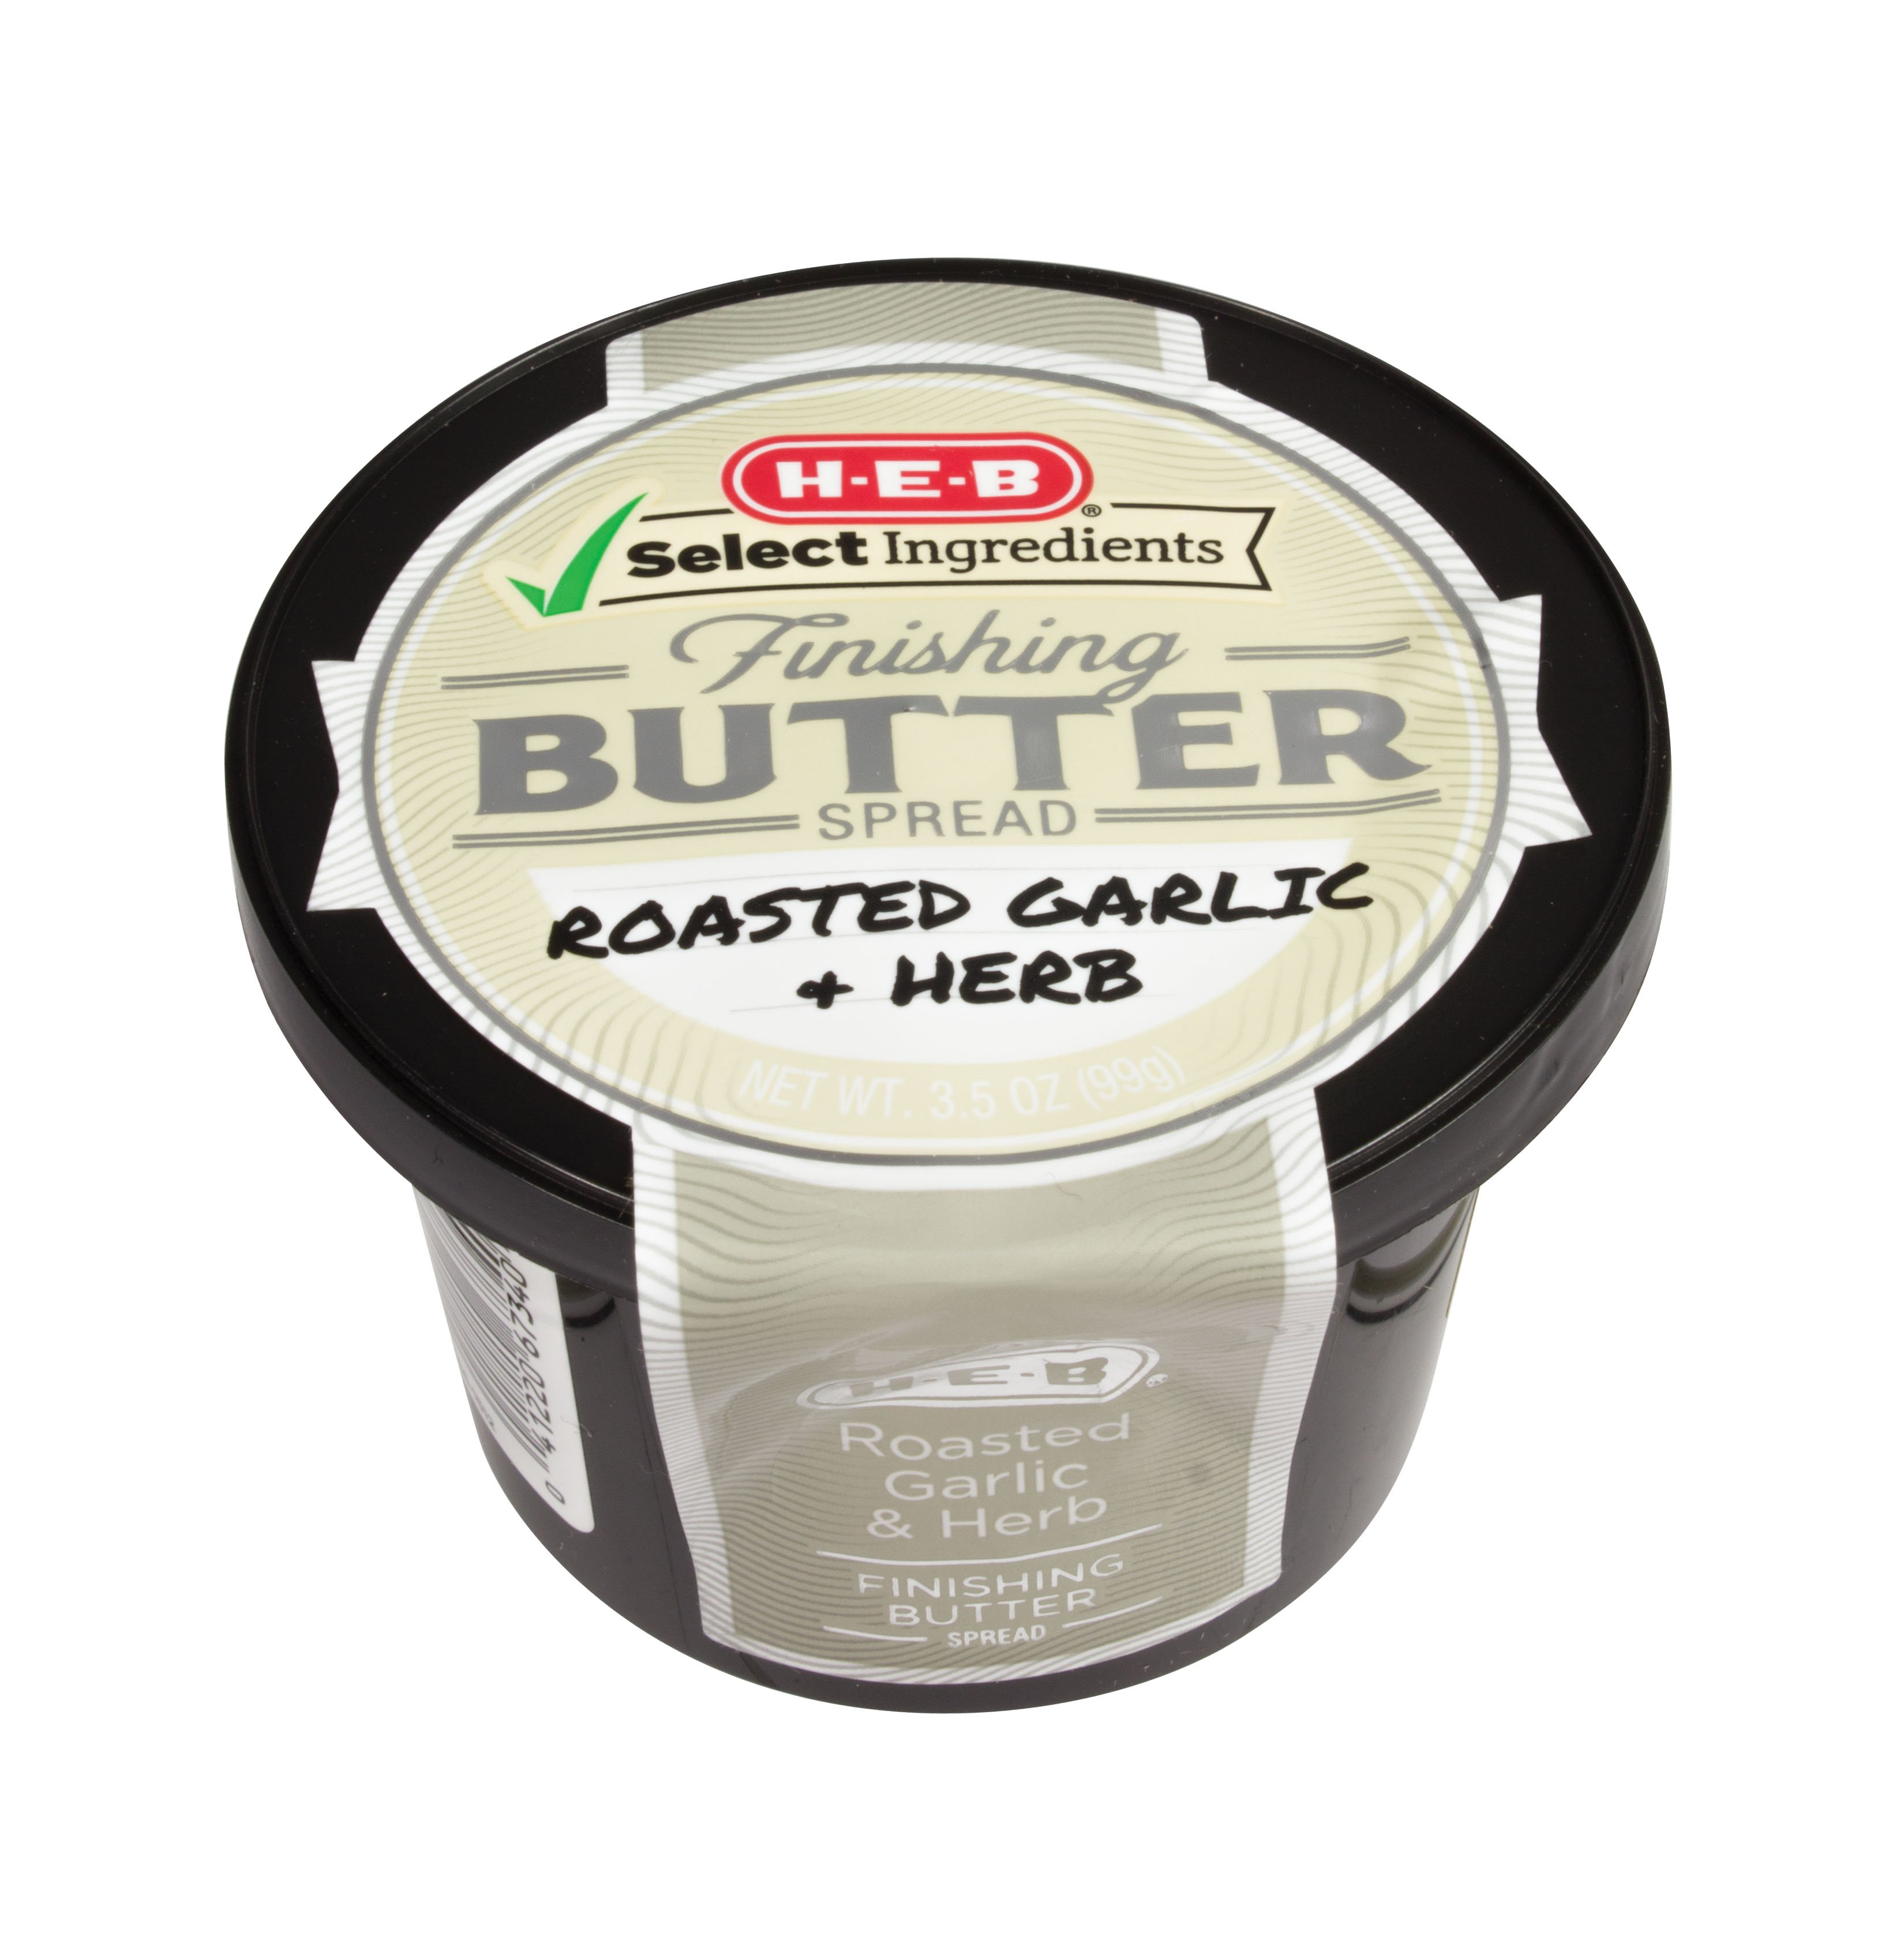 H-E-B Roasted Garlic & Herb Finishing Butter